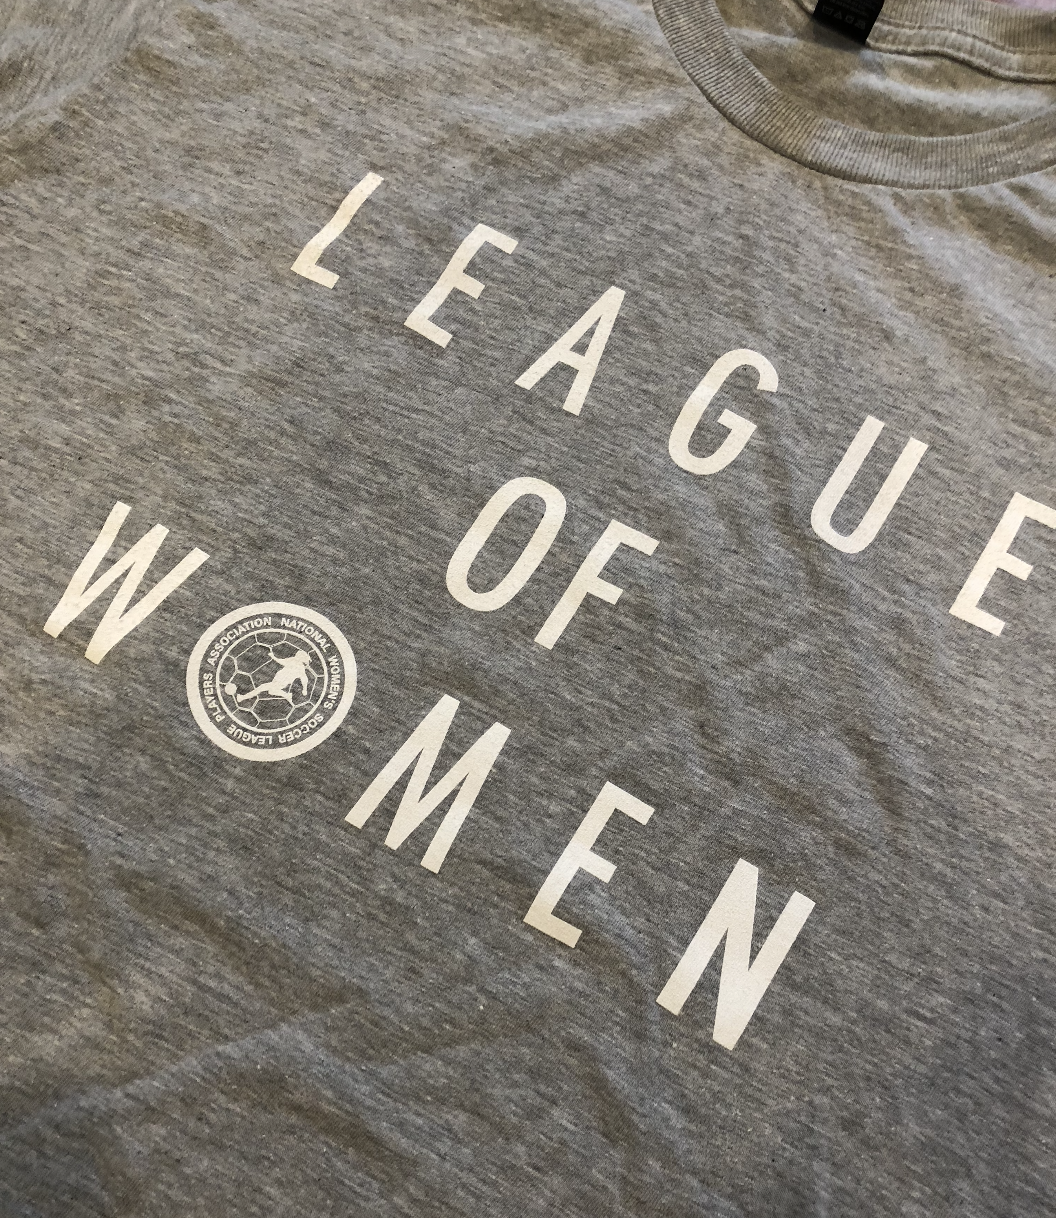 League of Women NWSLPA T-Shirt - soccergrlprobs